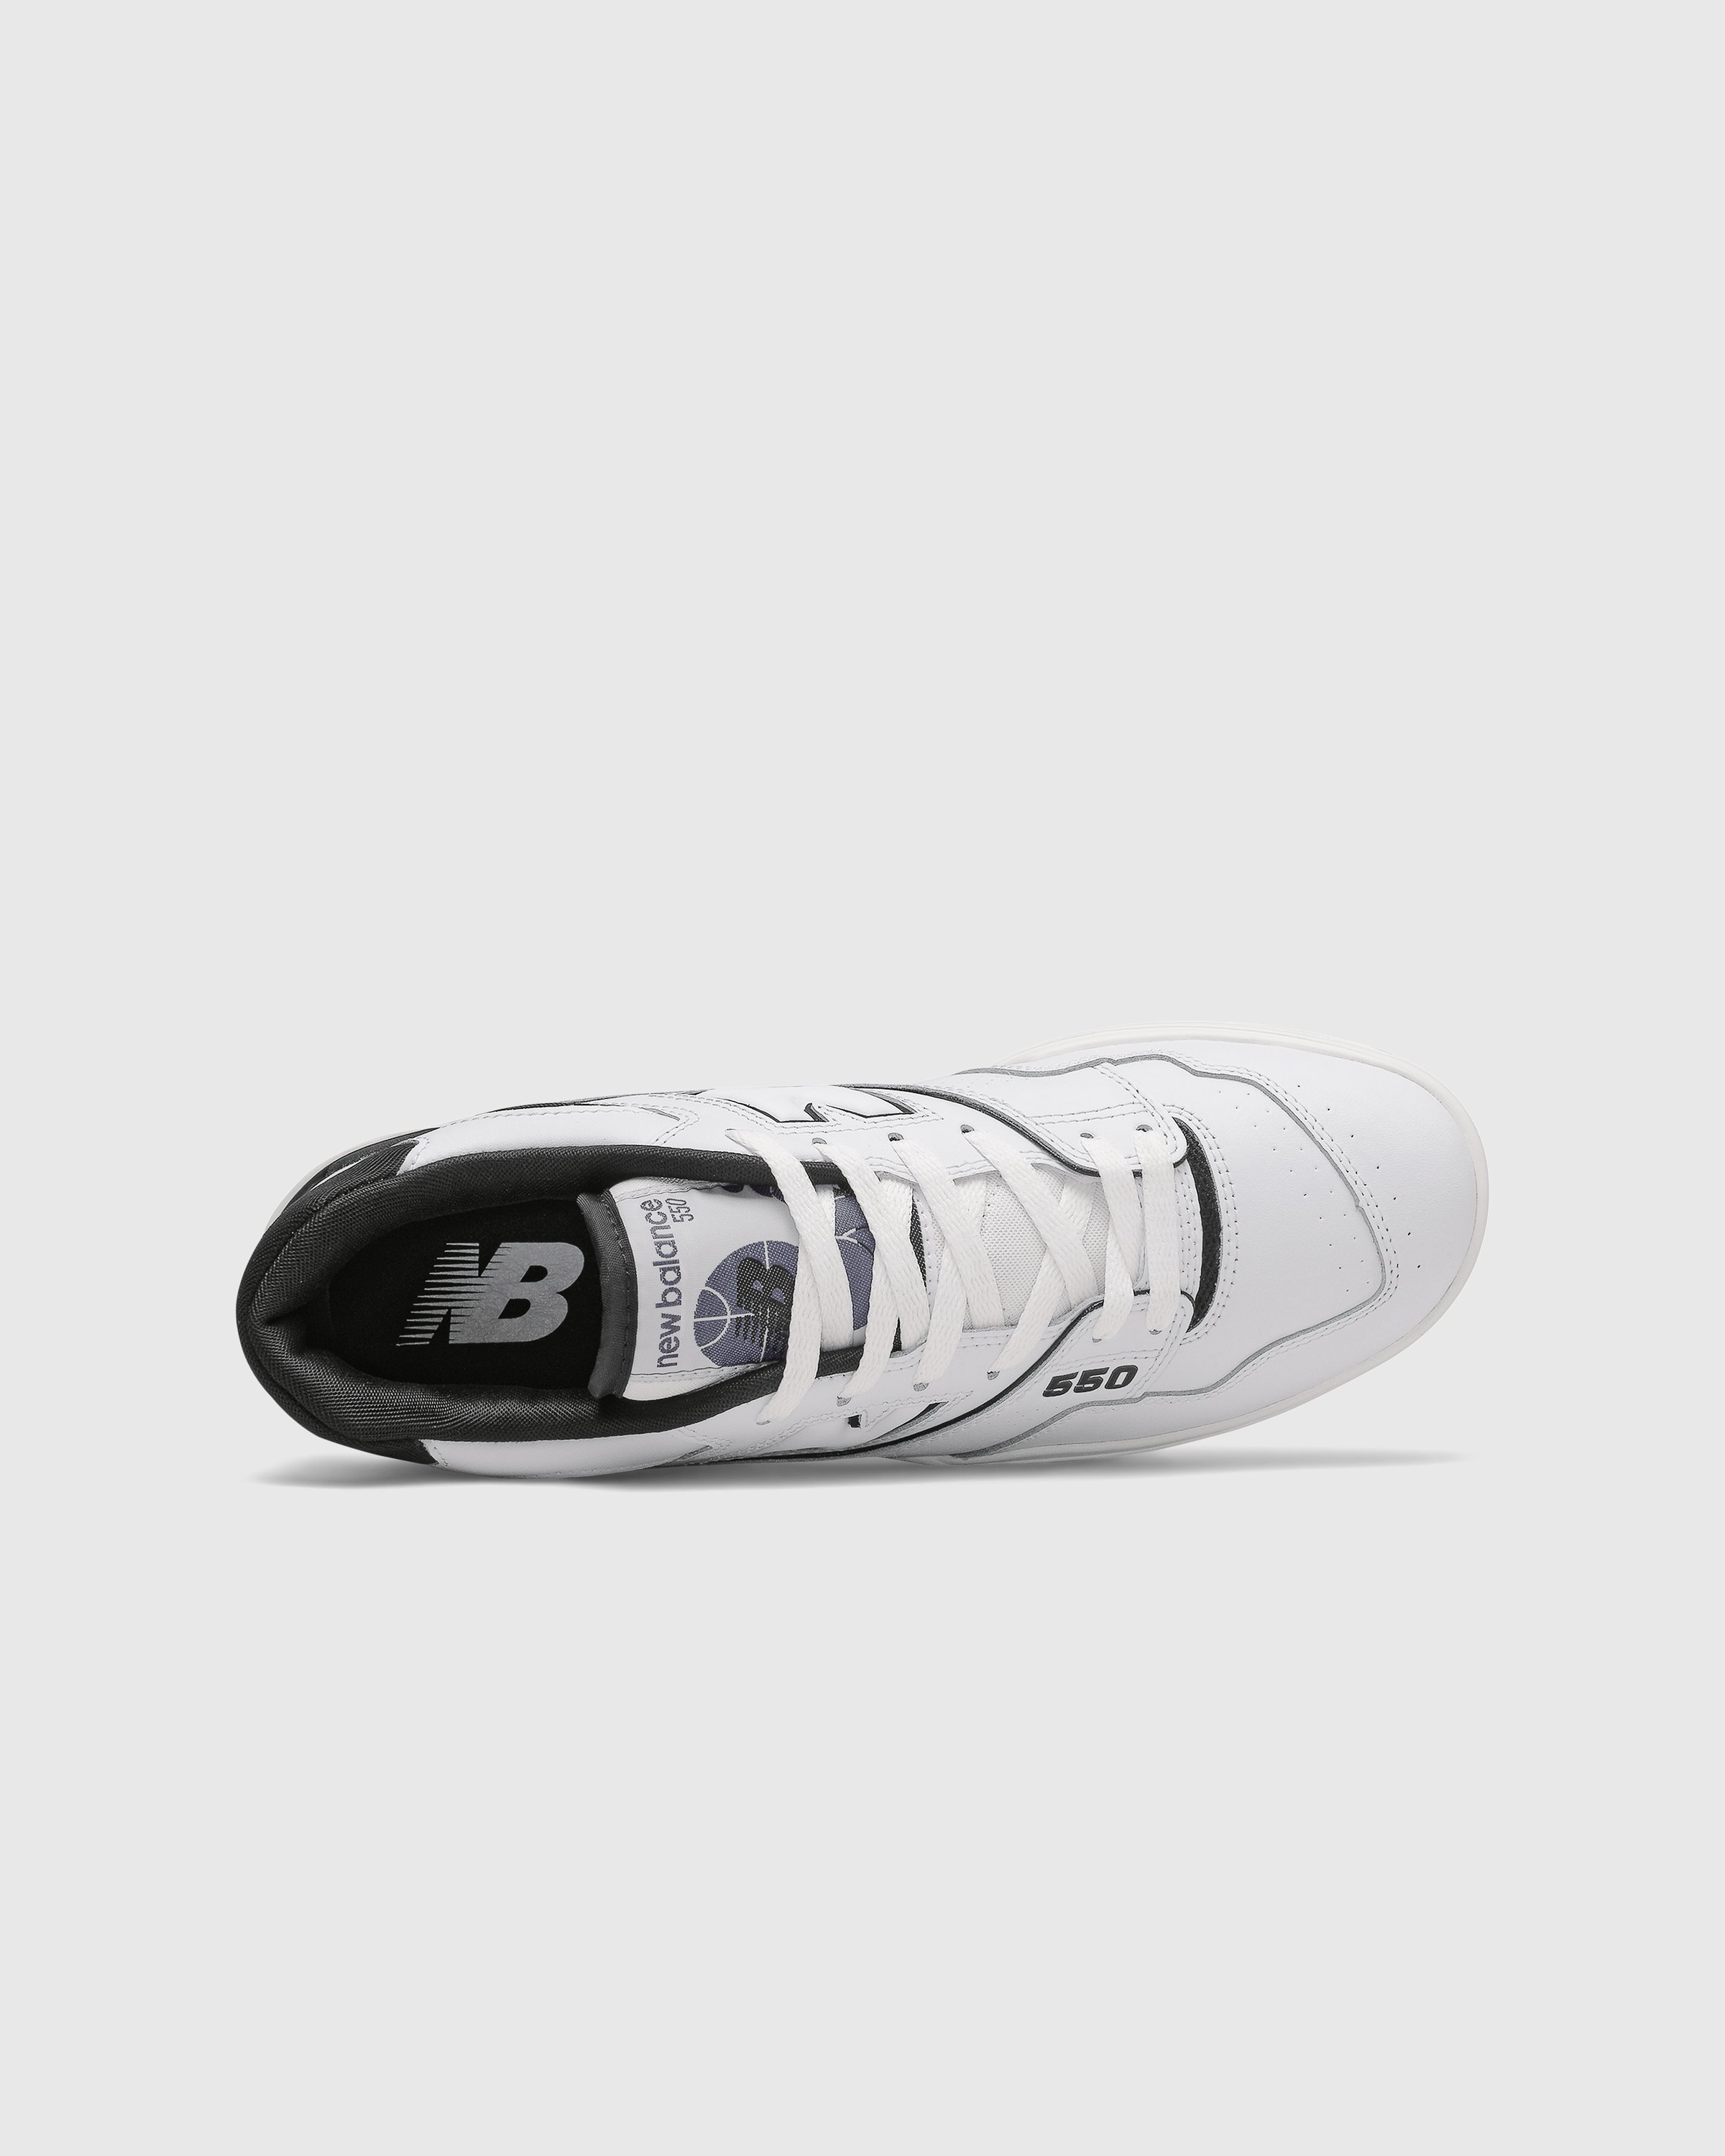 New Balance - BB550HA1 WHITE - Footwear - White - Image 4